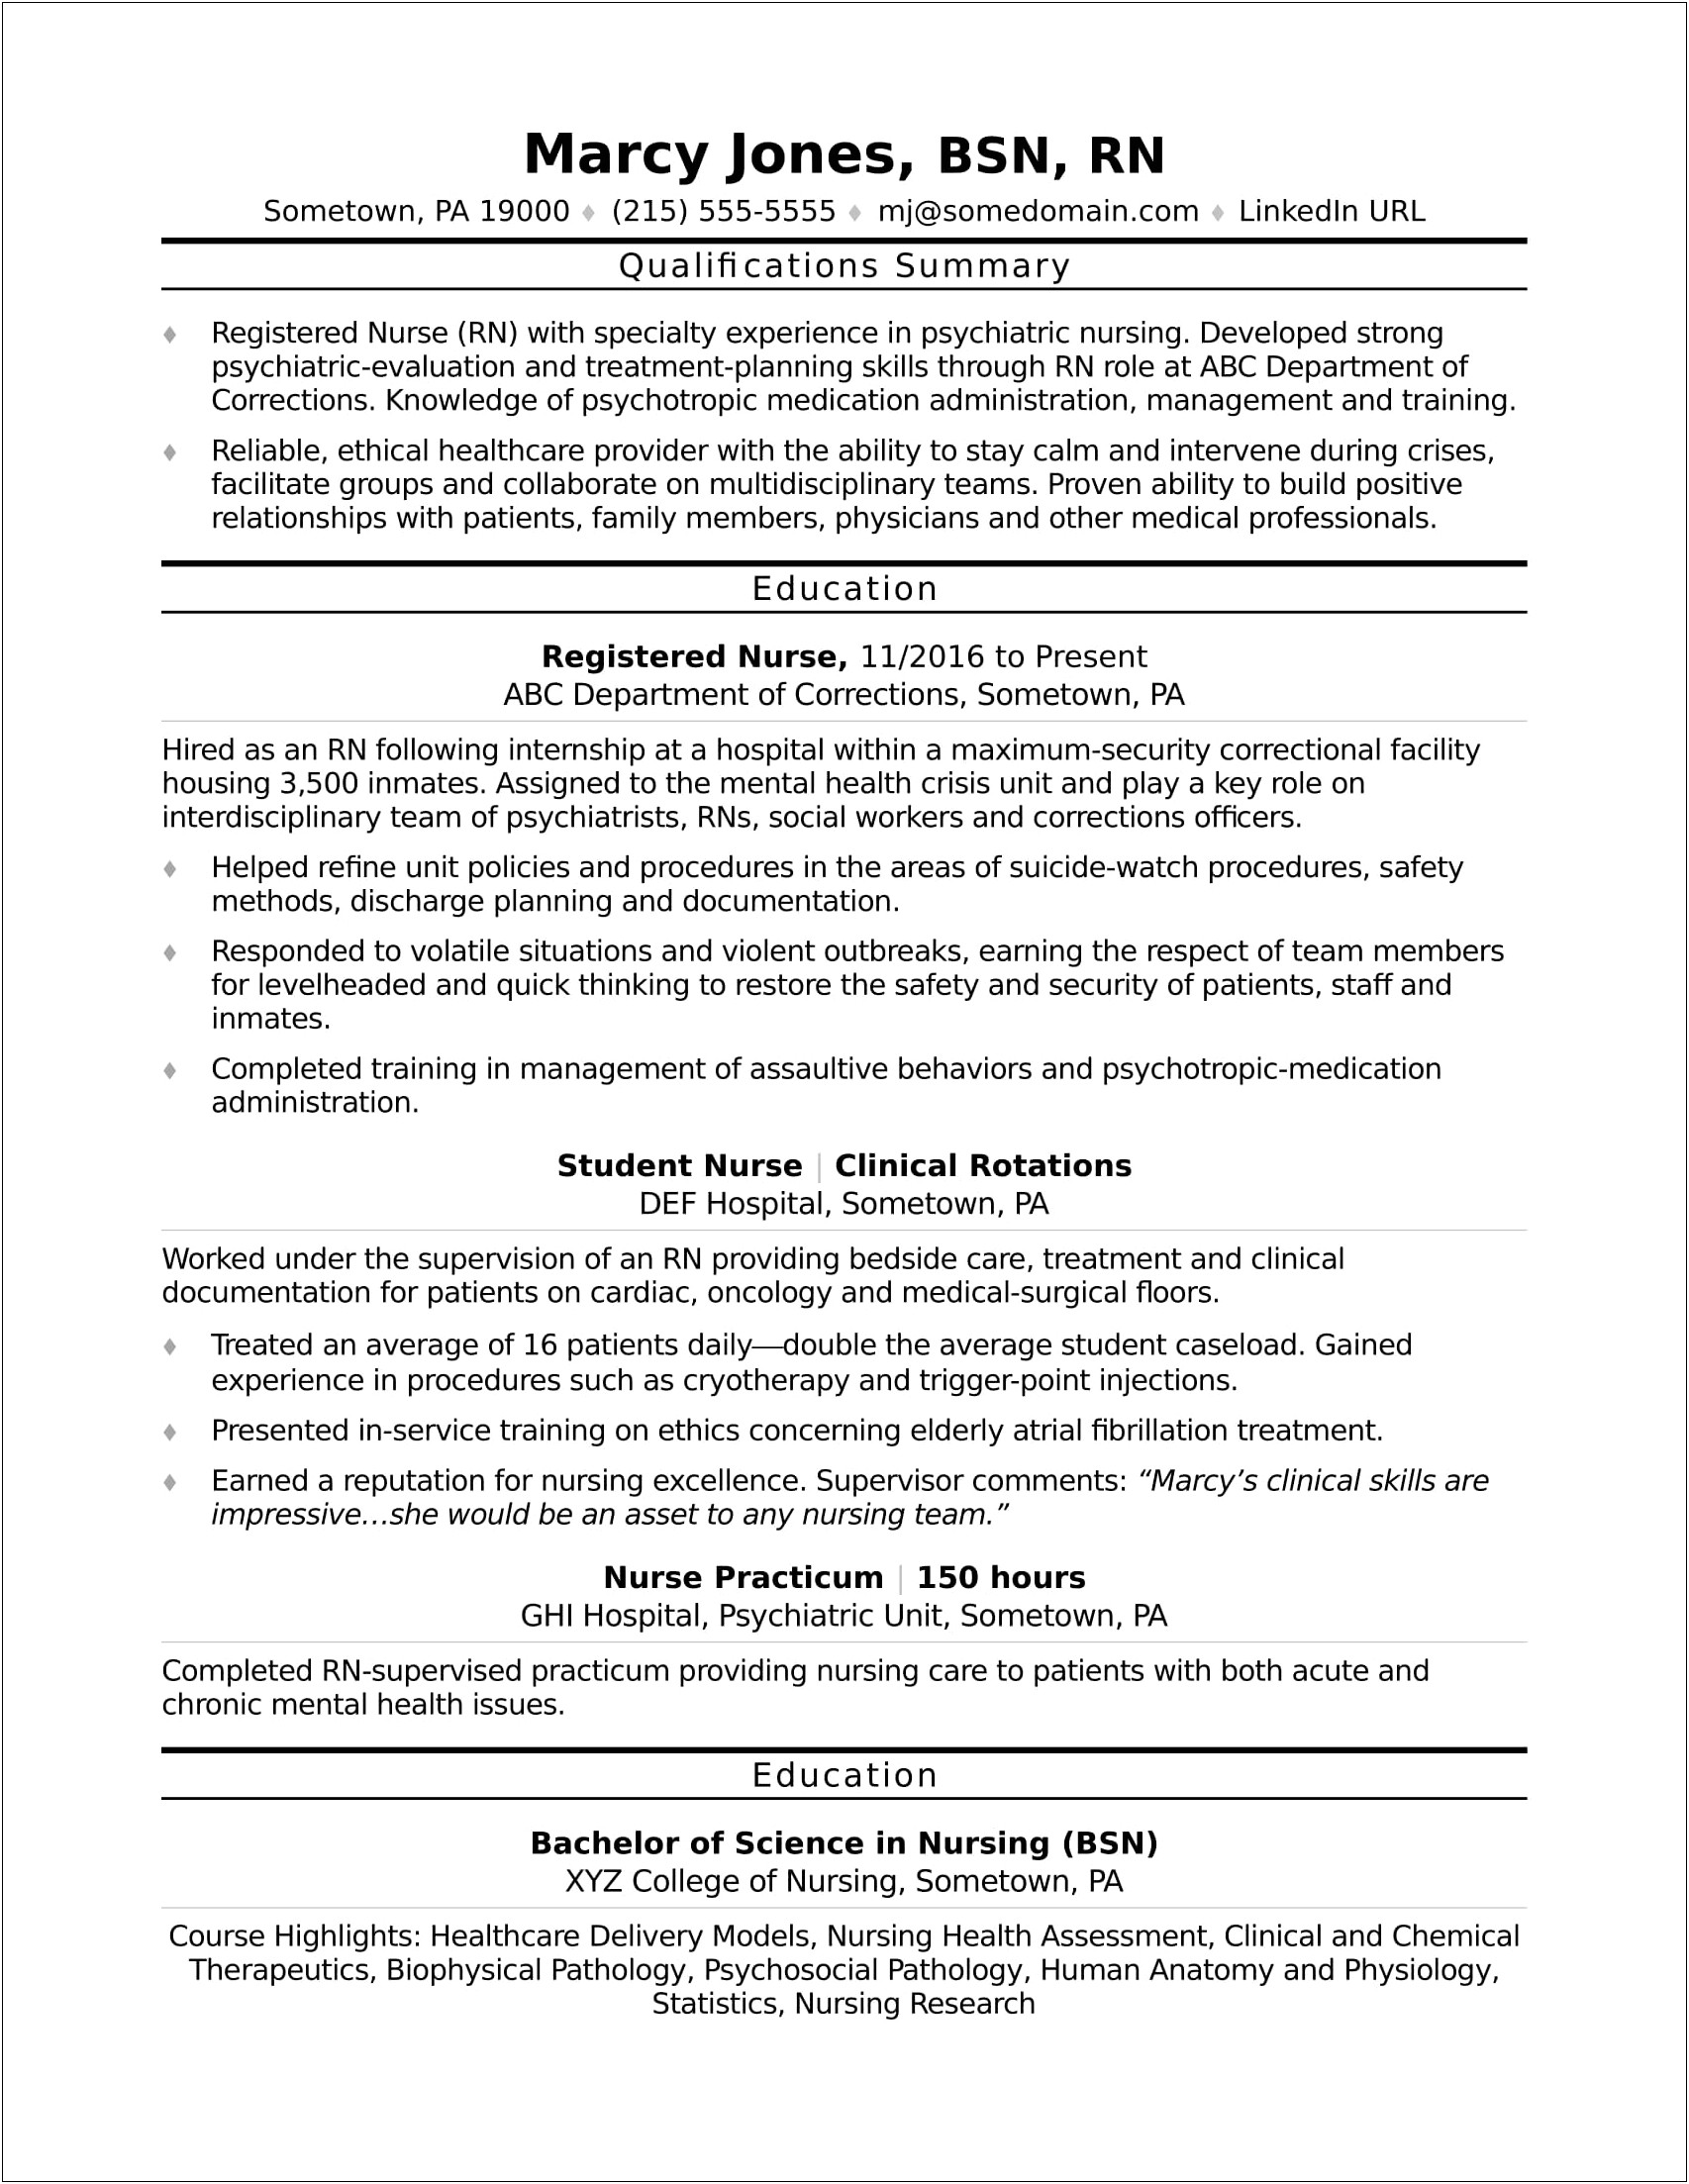 Resume Career Summary For New Graduates